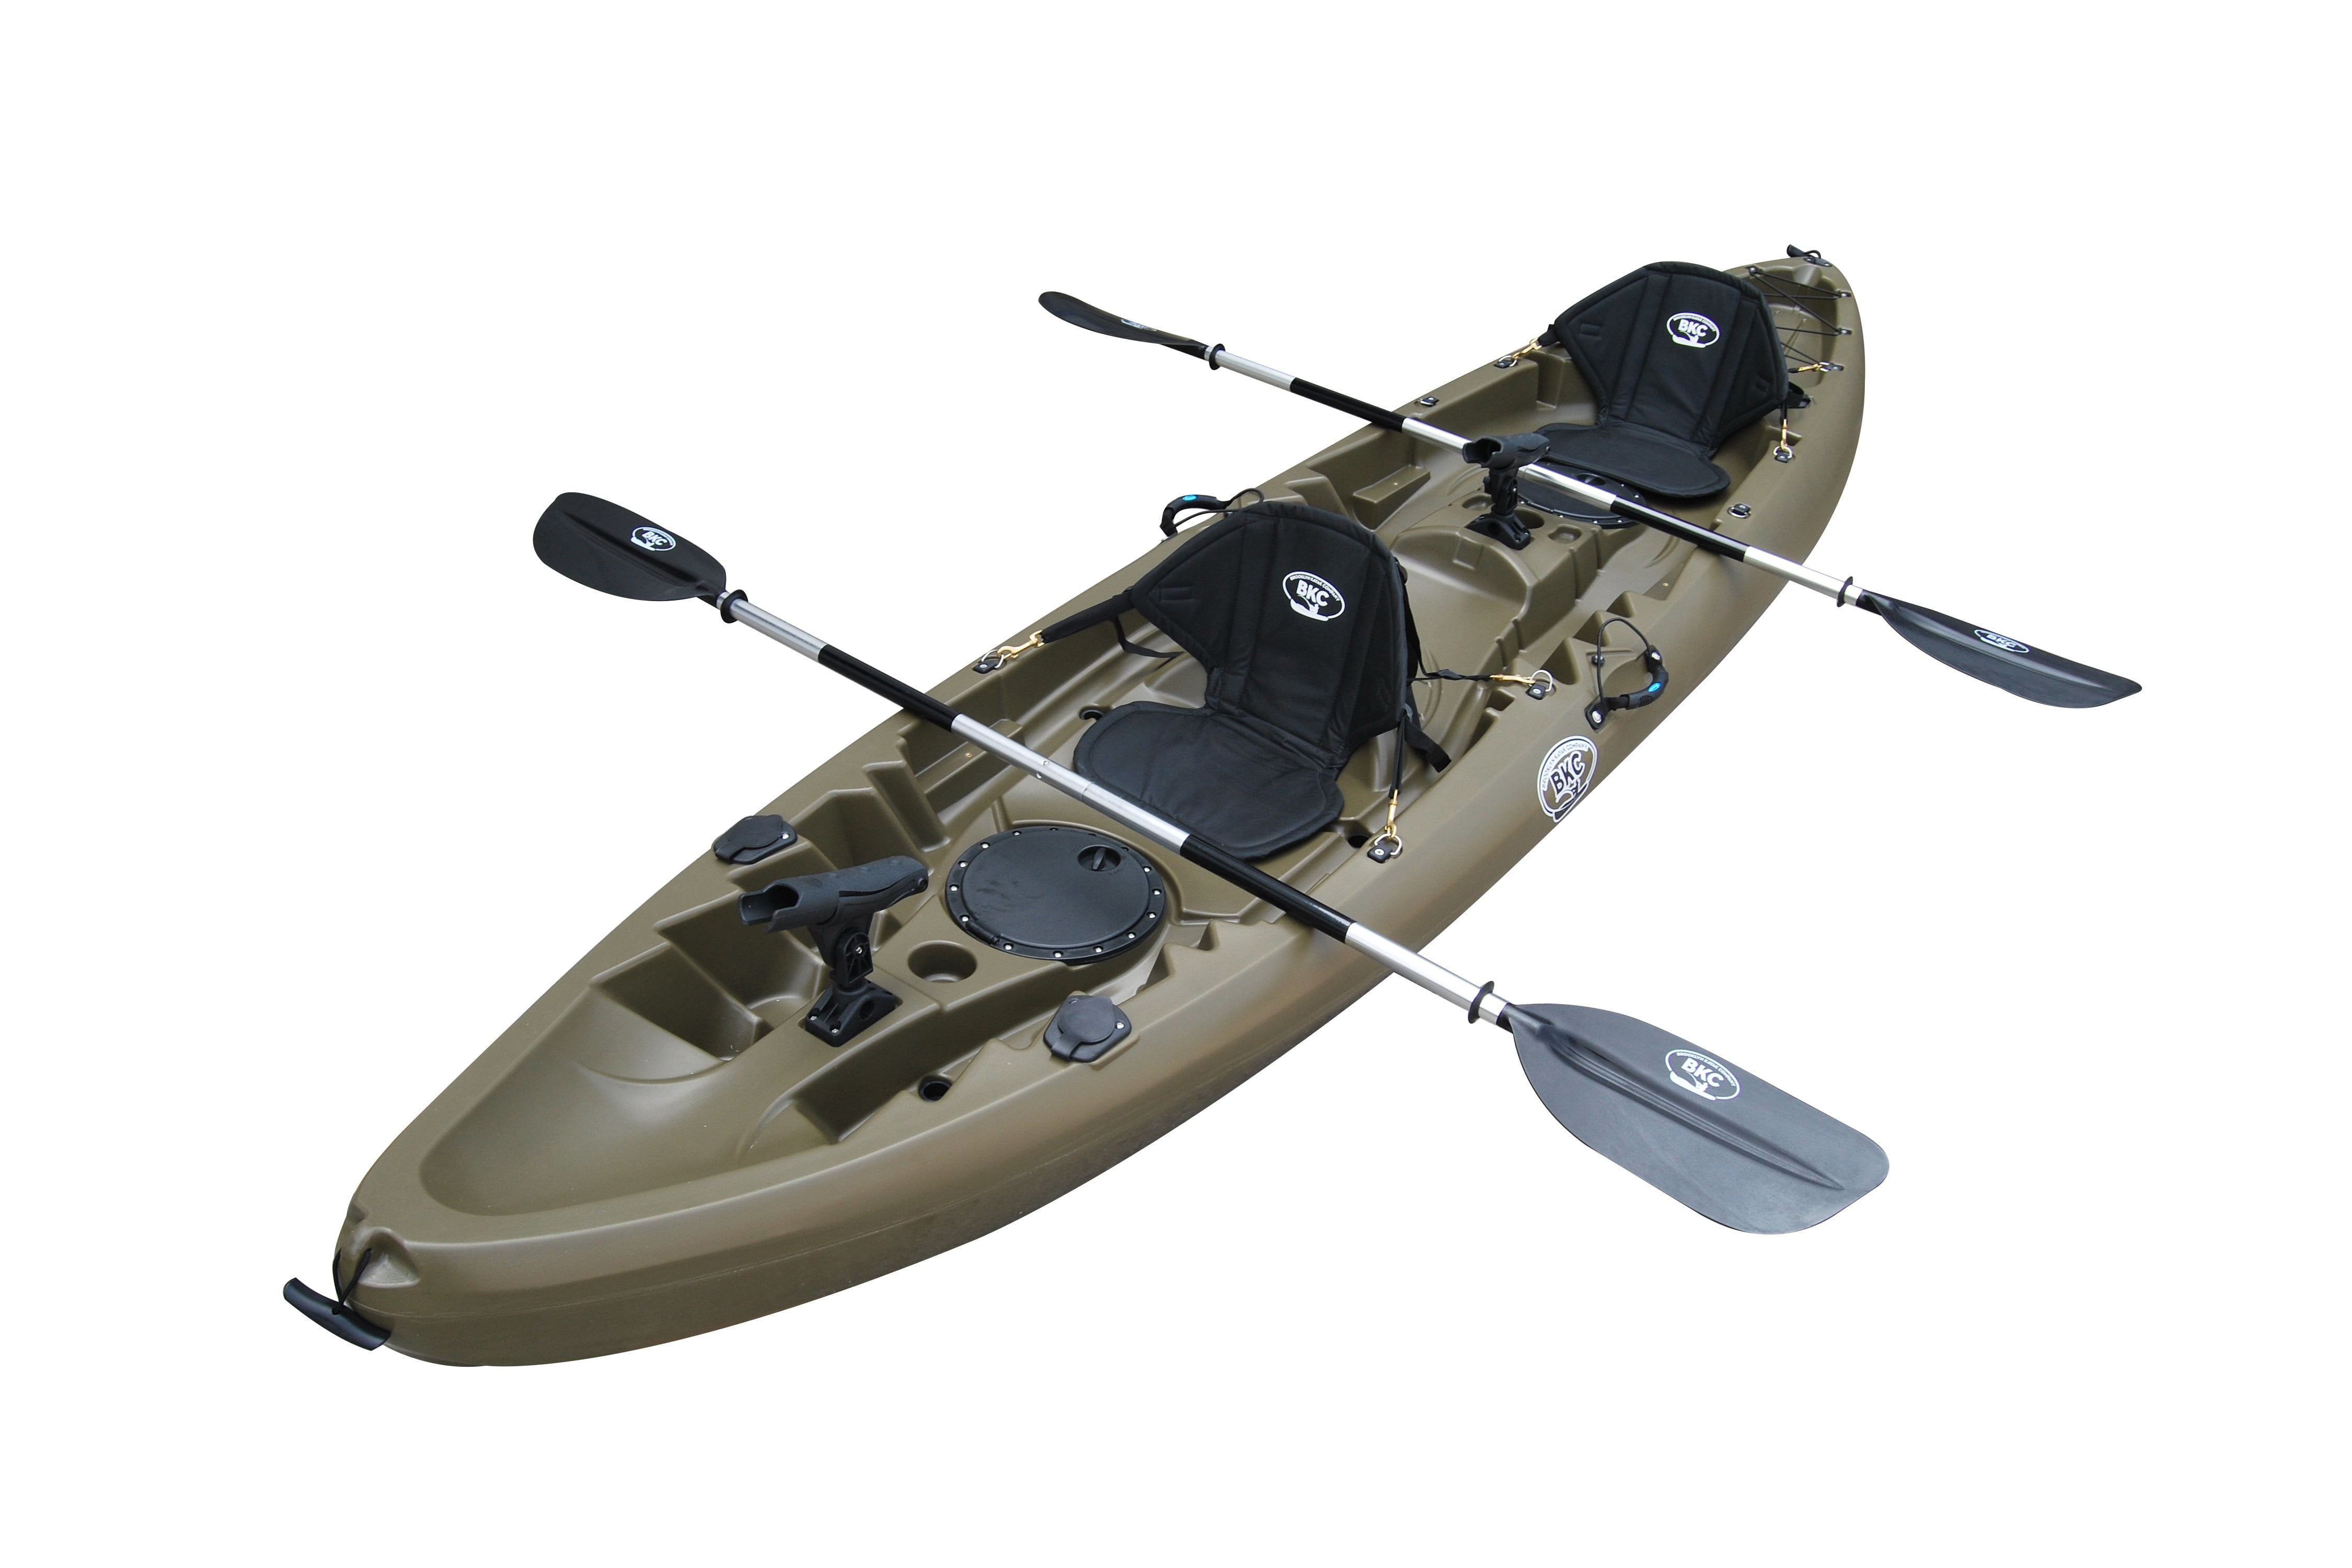 BKC TK219 12.2' Tandem Fishing Kayak W/Soft Padded Seats